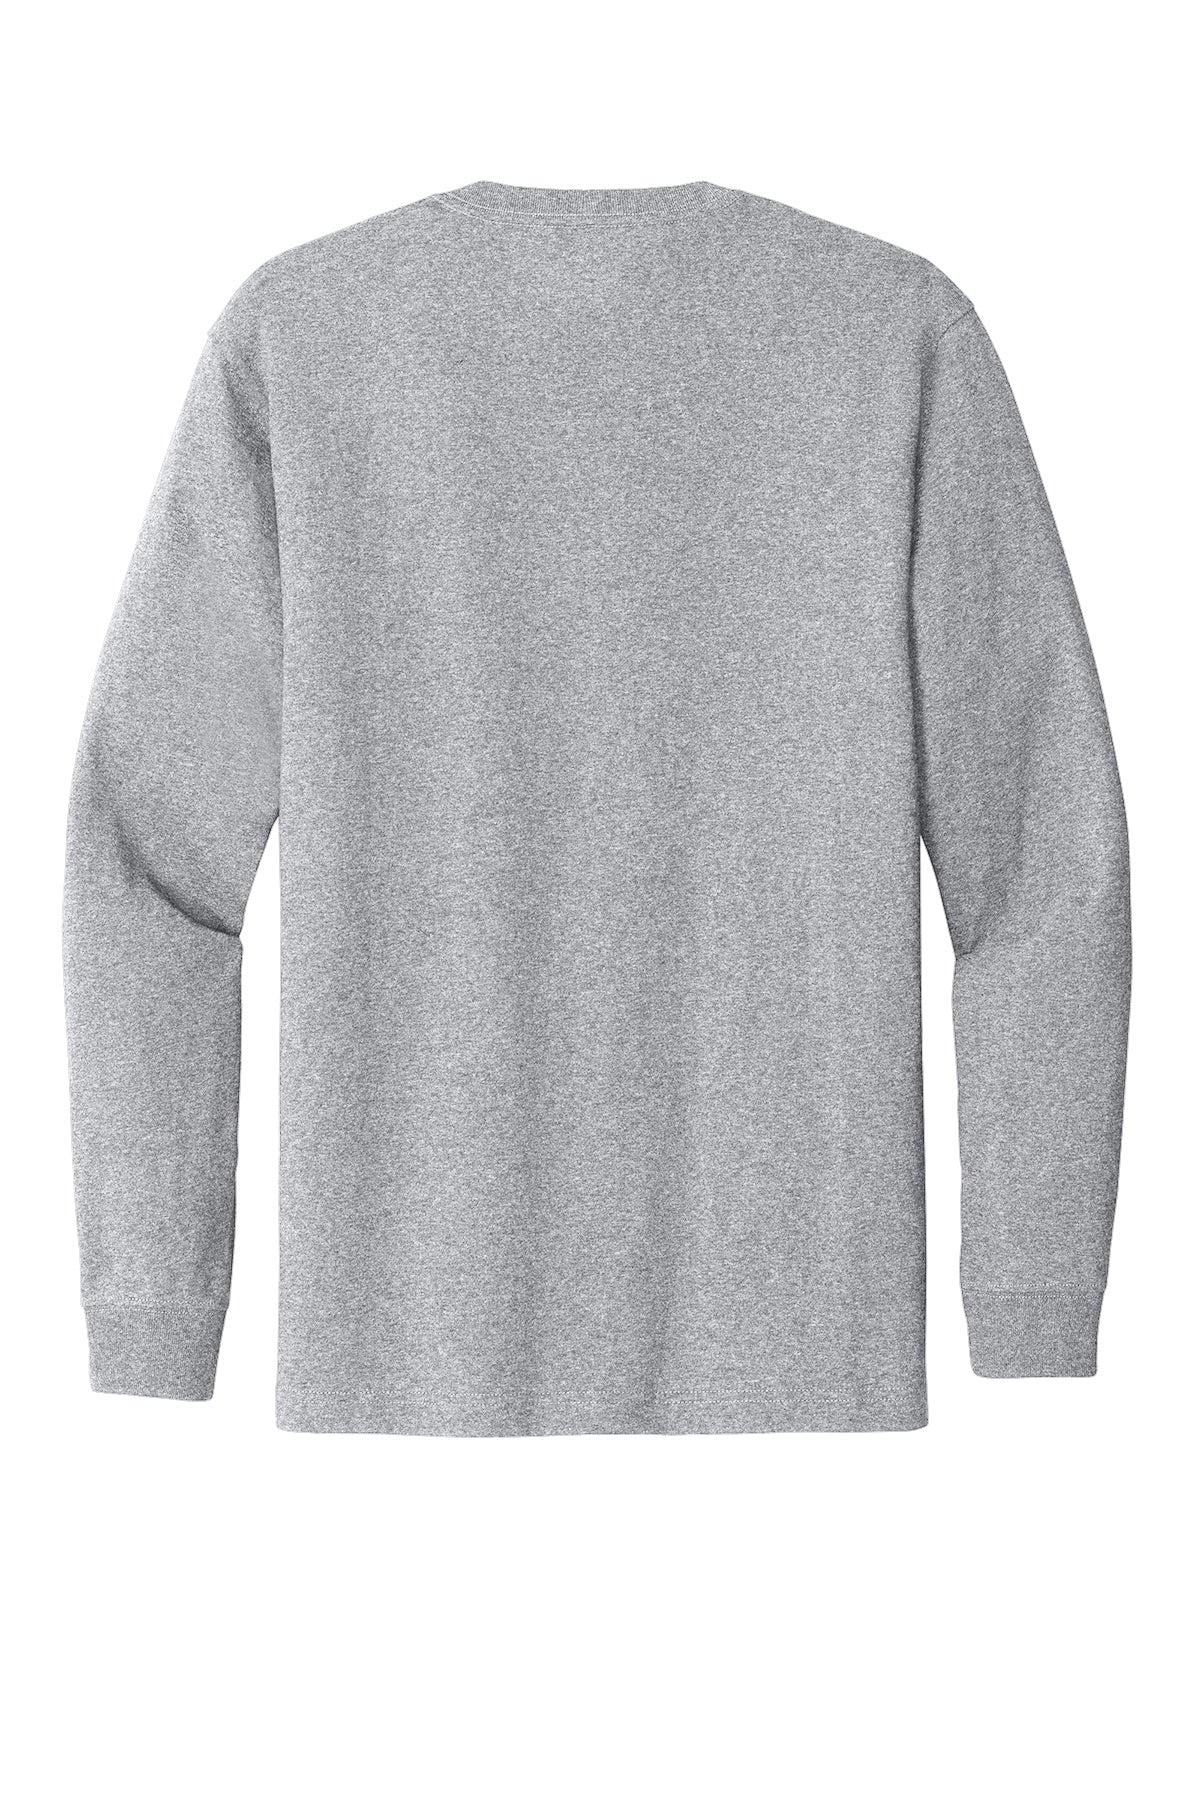 CTK126 Carhartt ® Workwear Pocket Long Sleeve T-Shirt